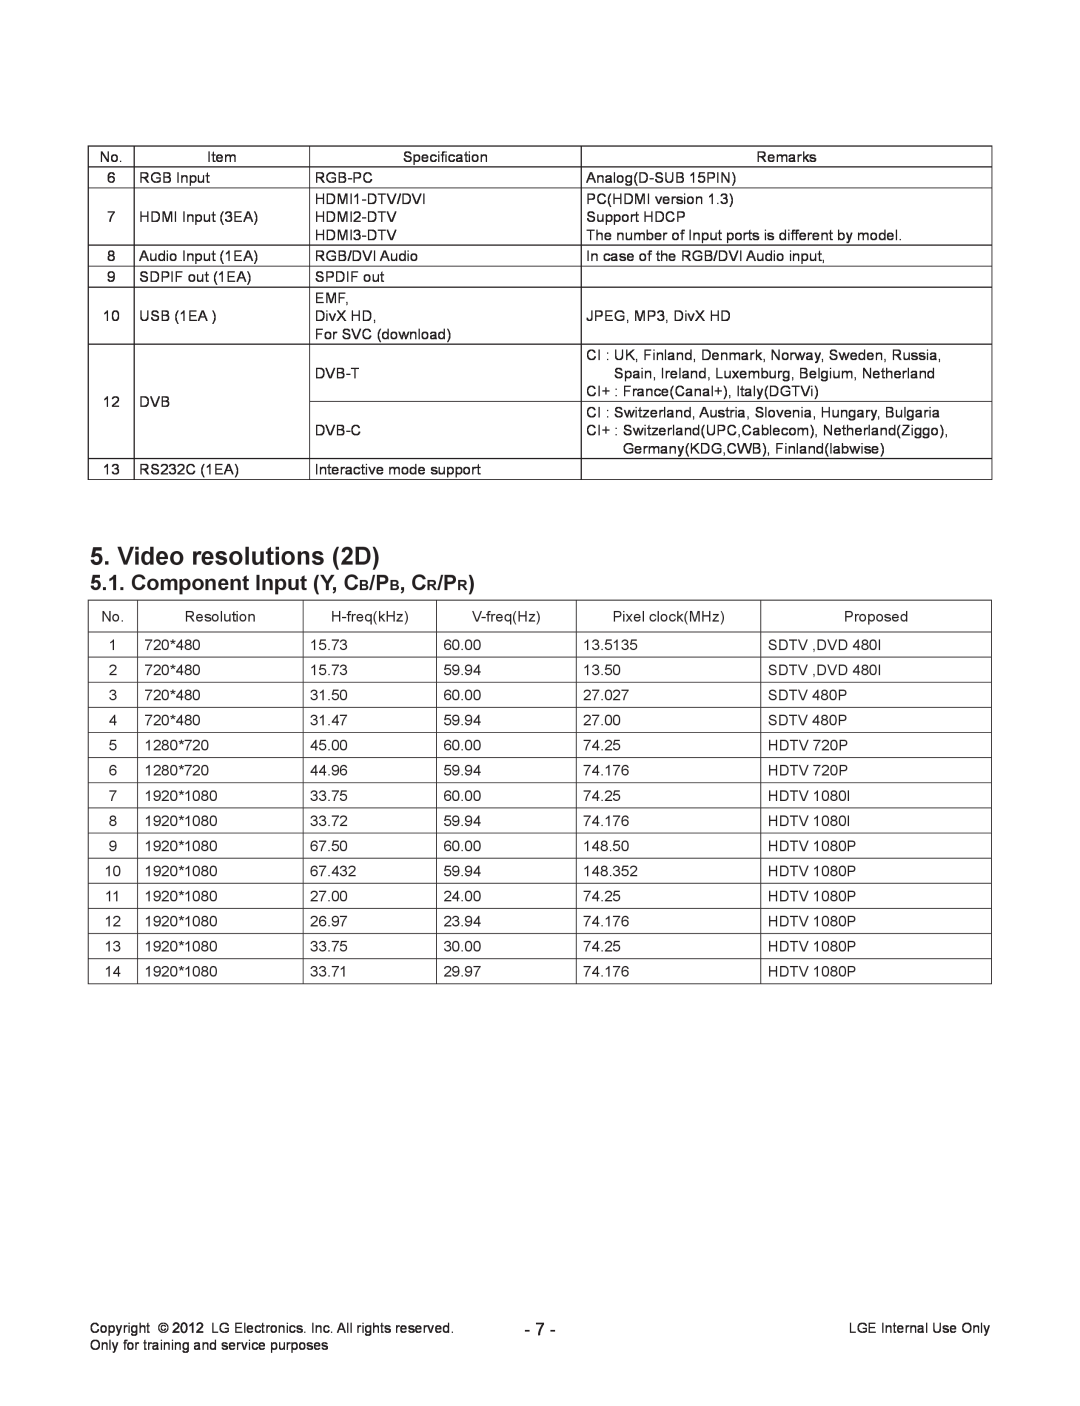 LG Electronics 32LT360C-ZA service manual Video resolutions 2D, Component Input Y, CB/PB, CR/PR 